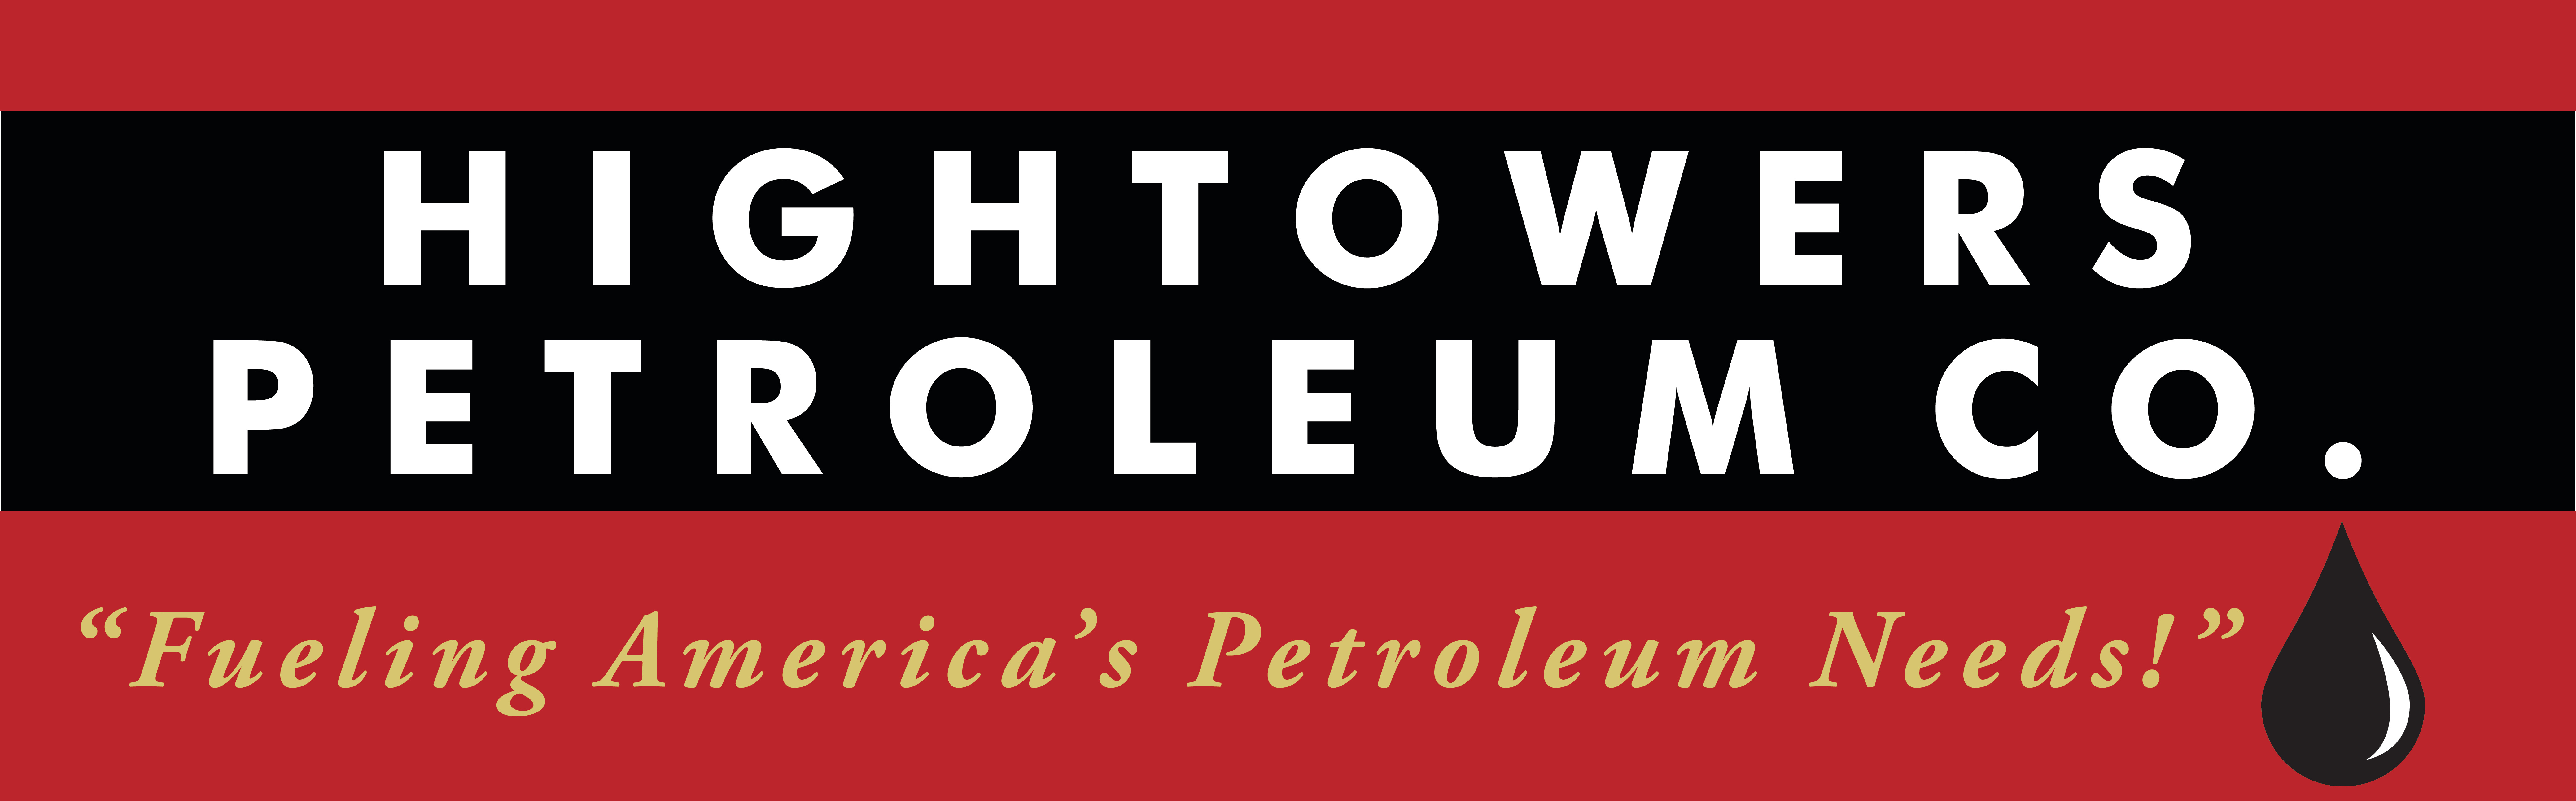 Hightowers Petroleum Co